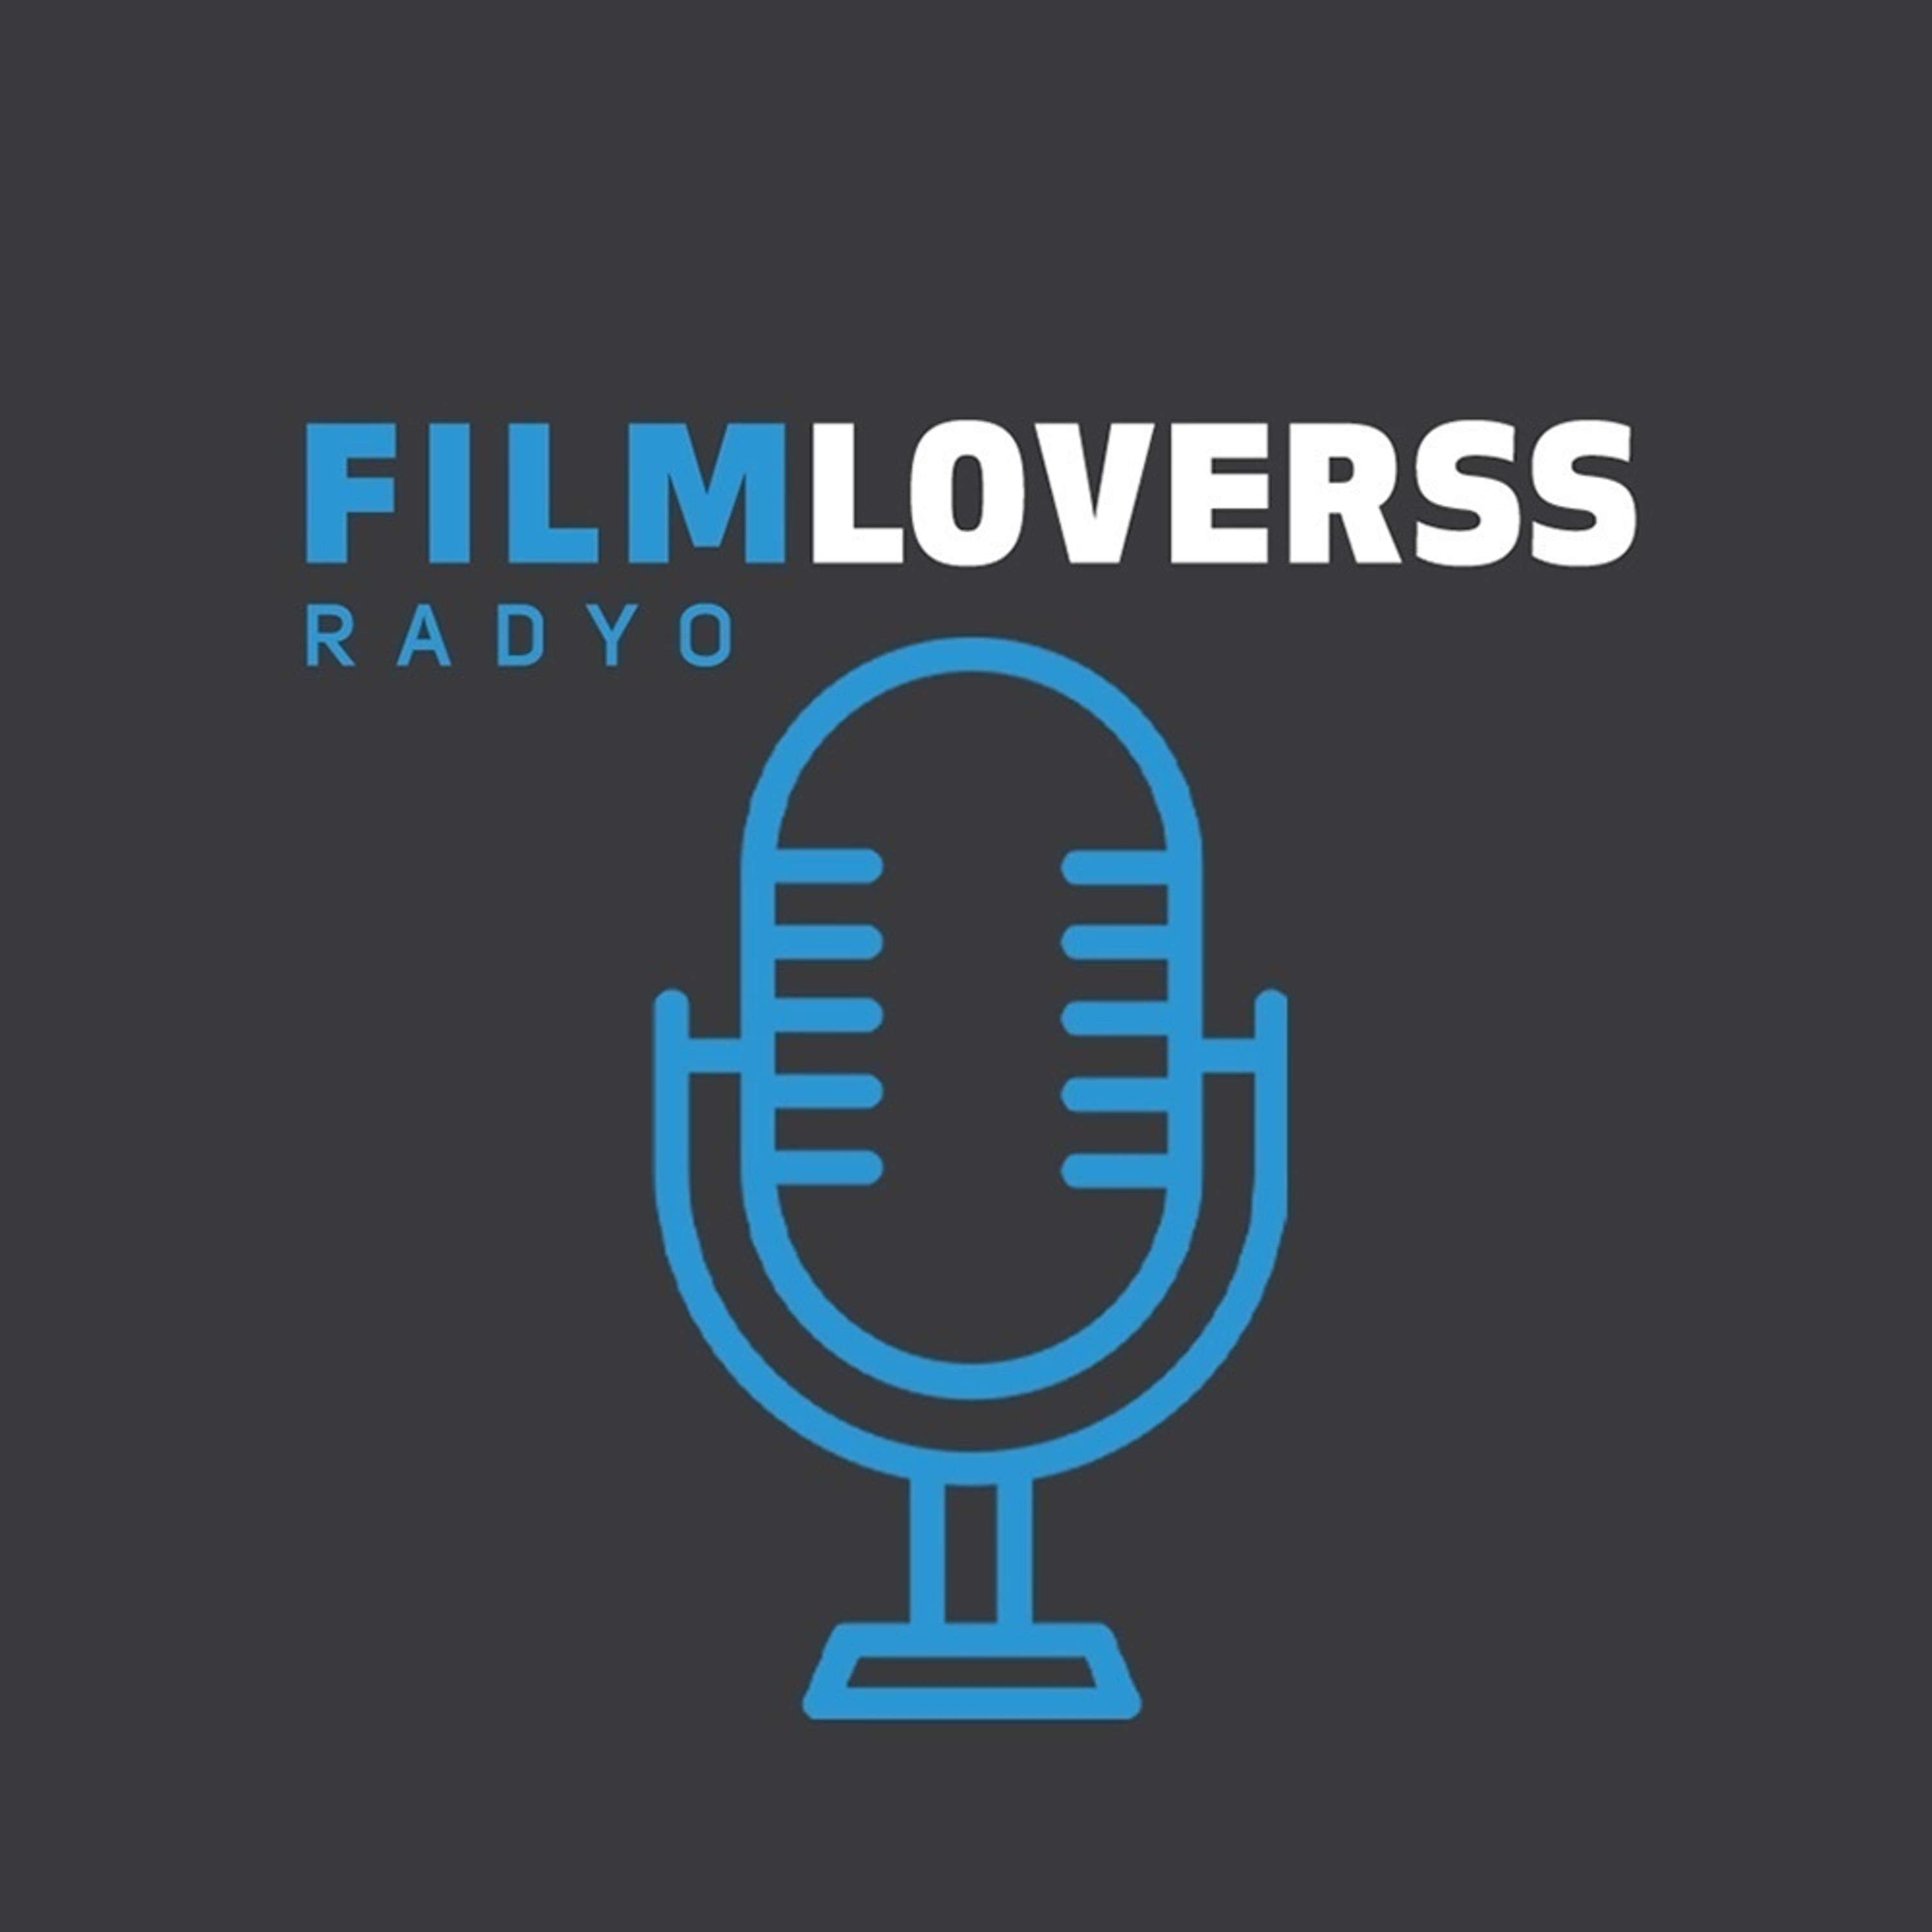 FilmLoverss Radyo